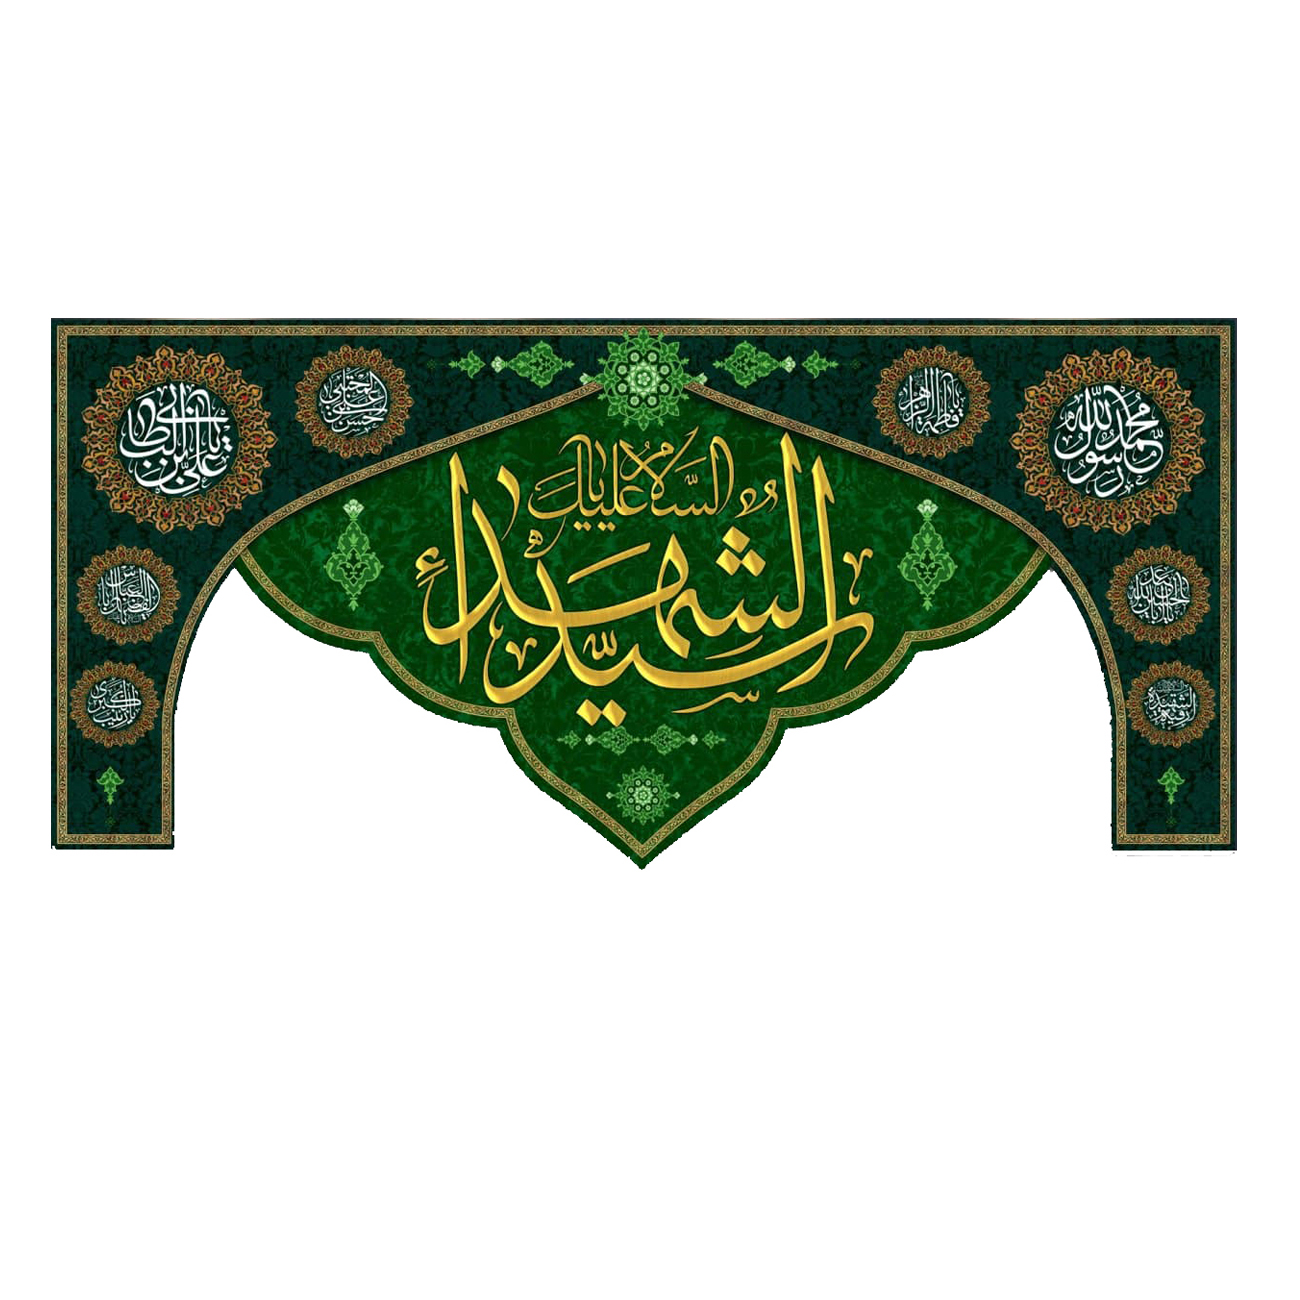 پرچم مدل السلام علیک یا سید الشهدا کد 5000146-140300